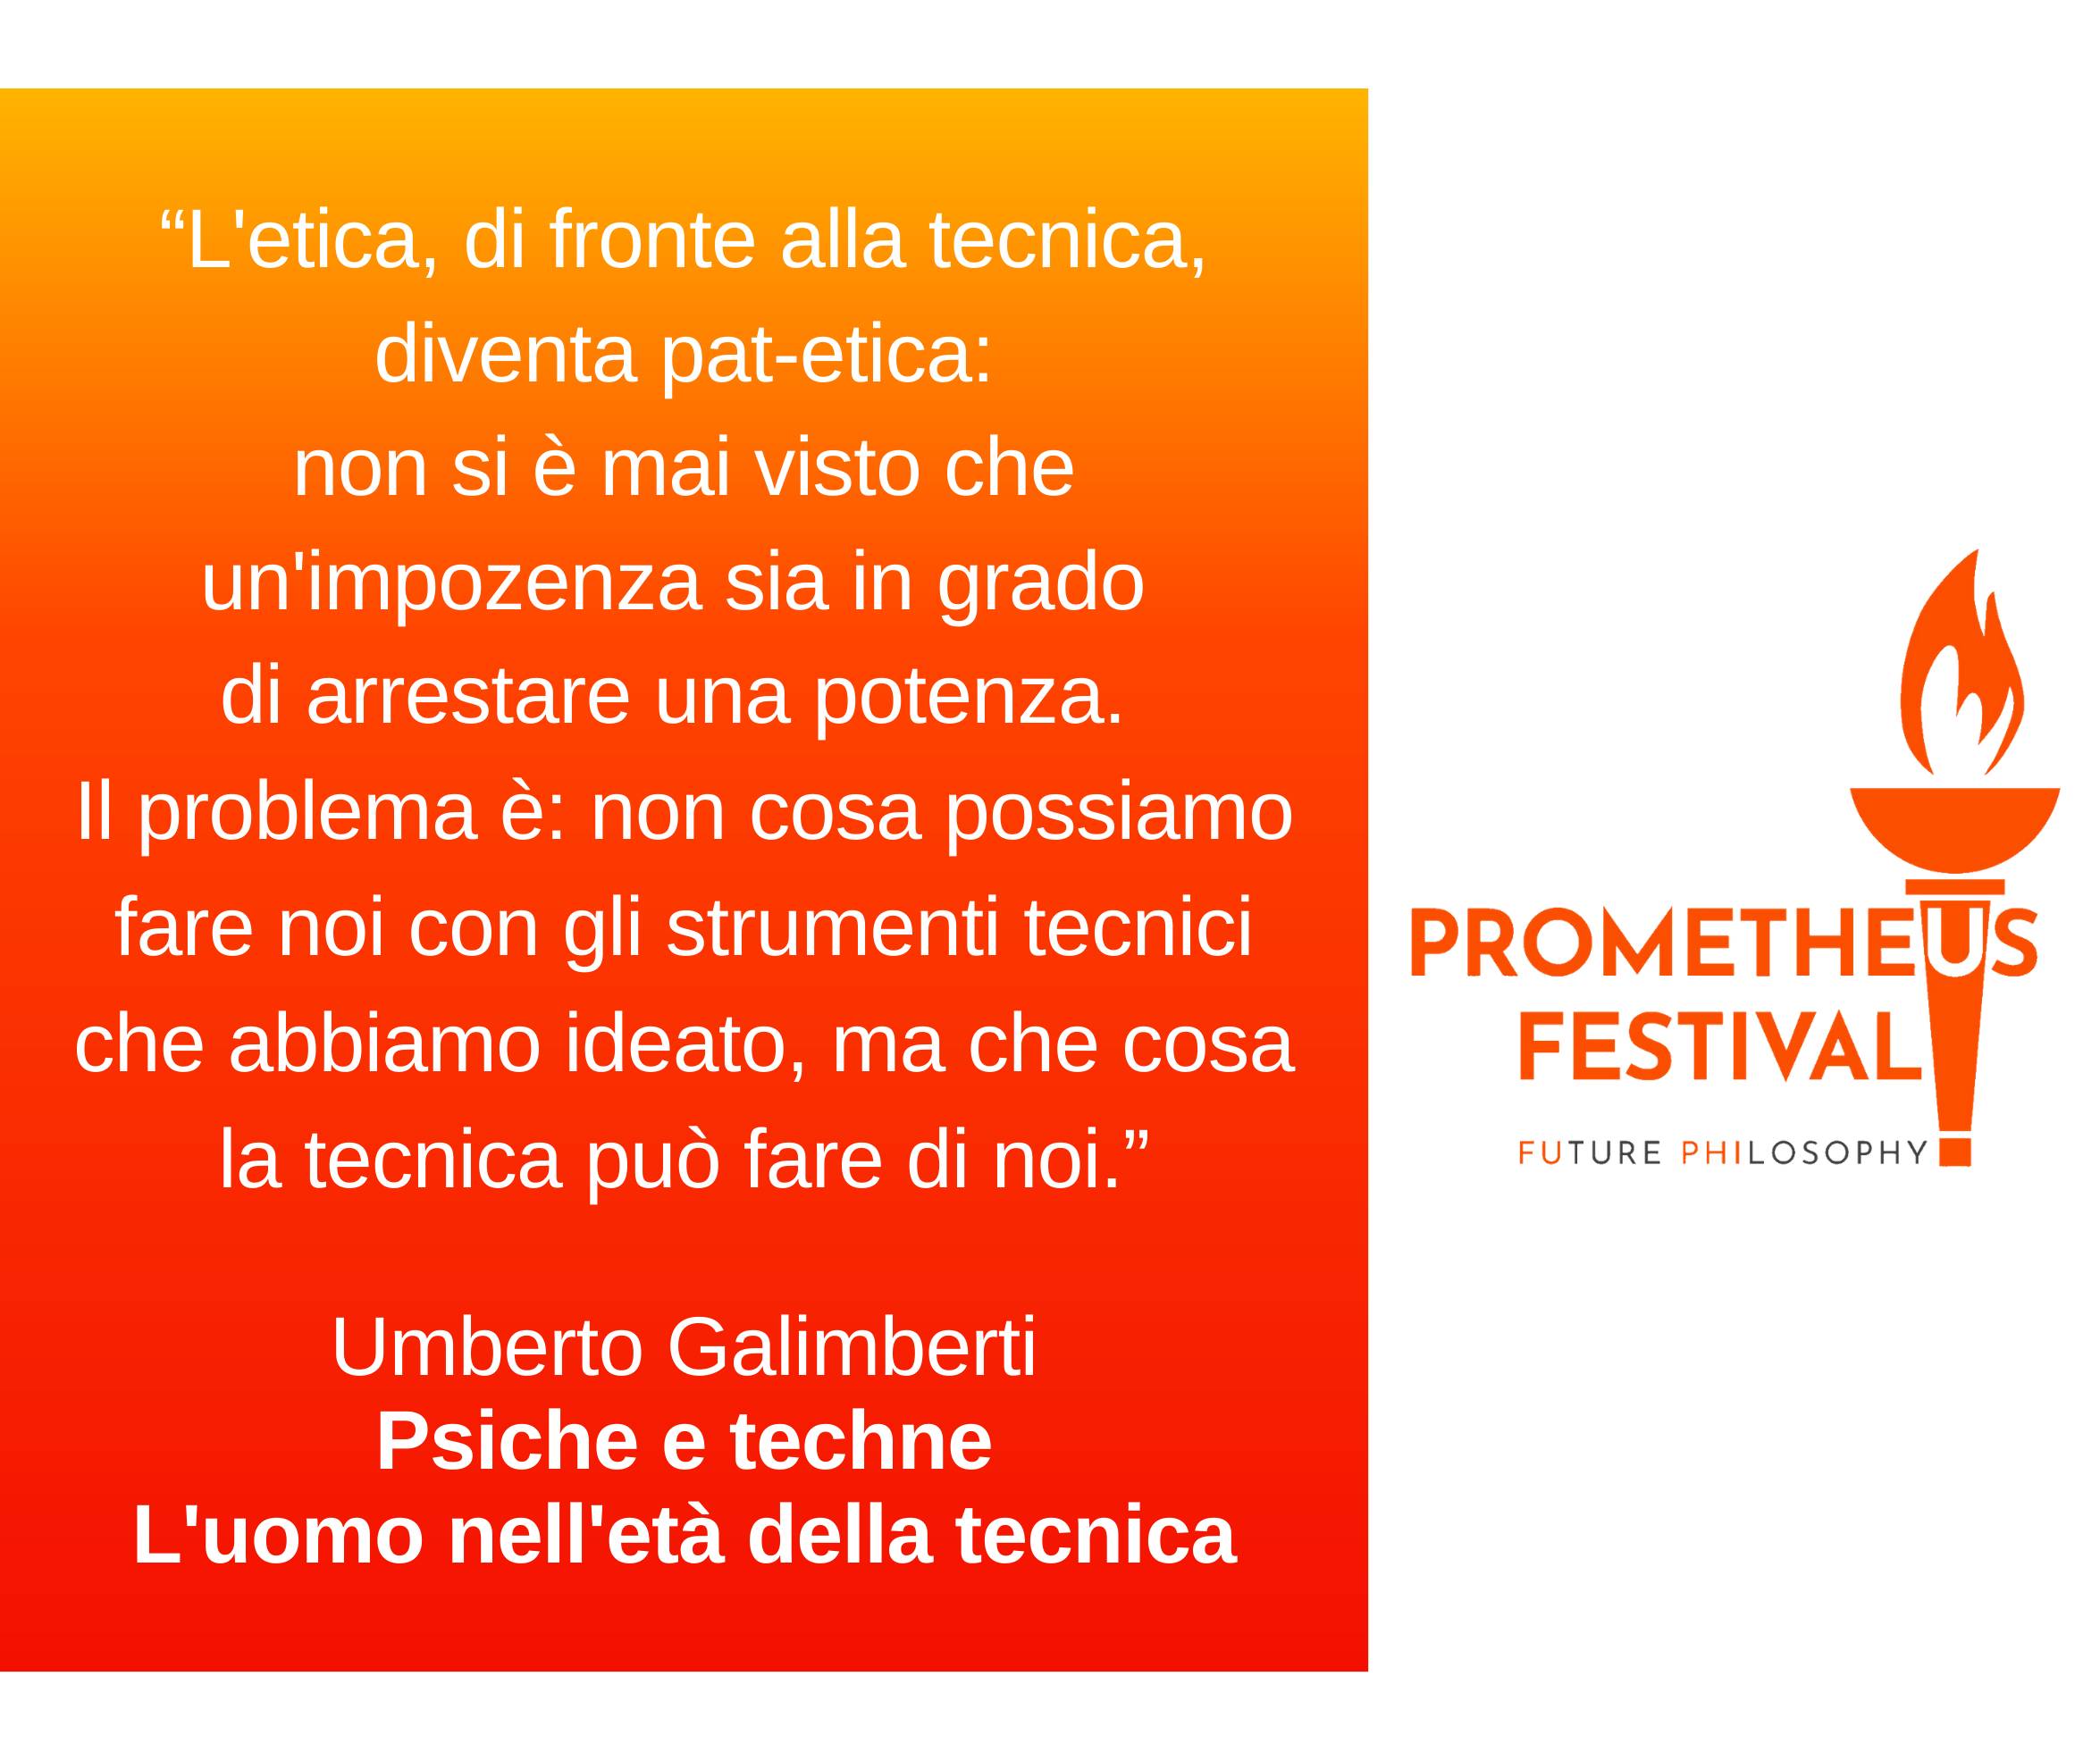 Umberto Galimberti Prometheus Festival